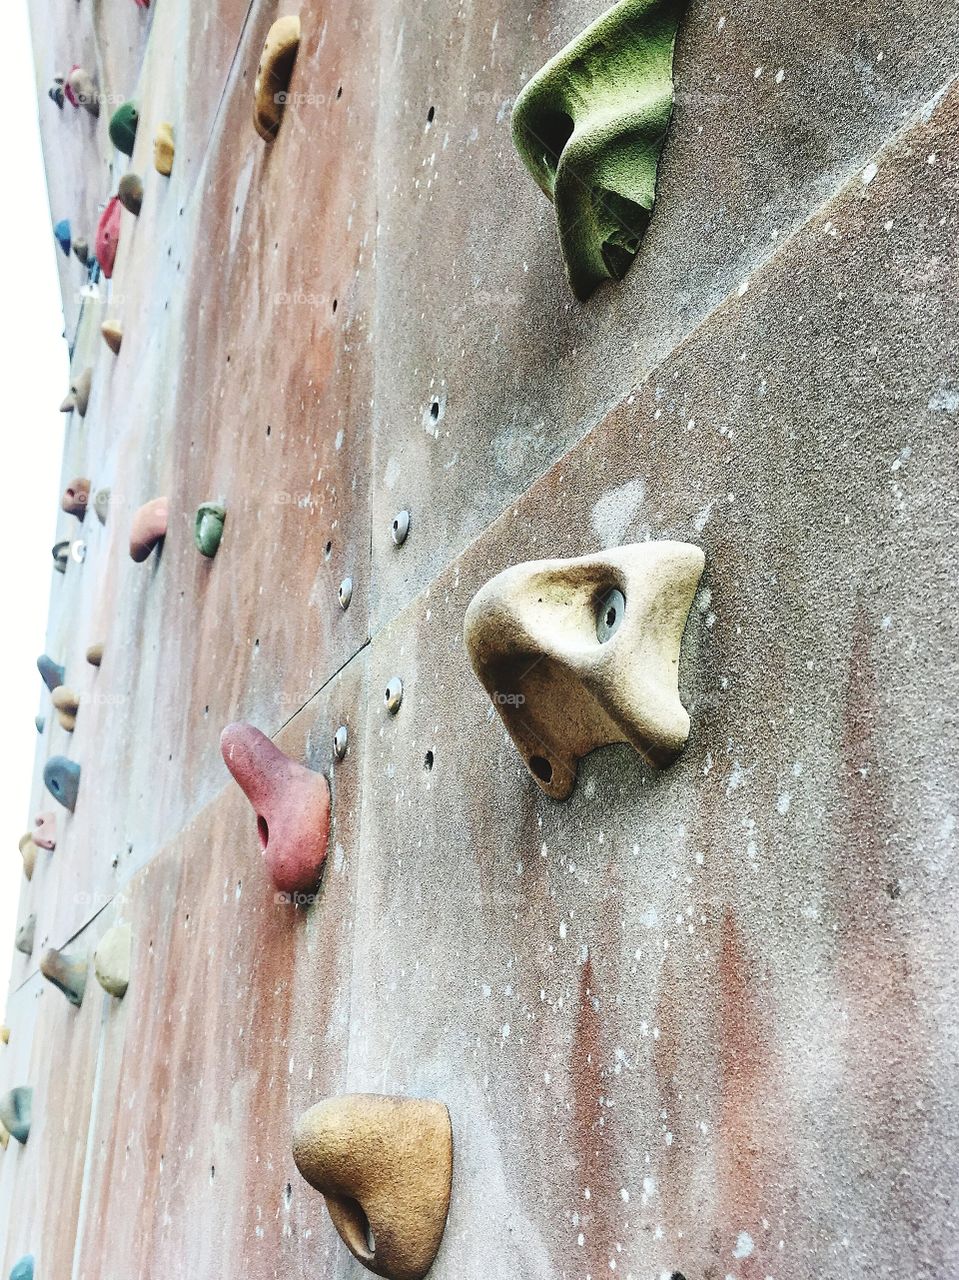 Rock climbing wall